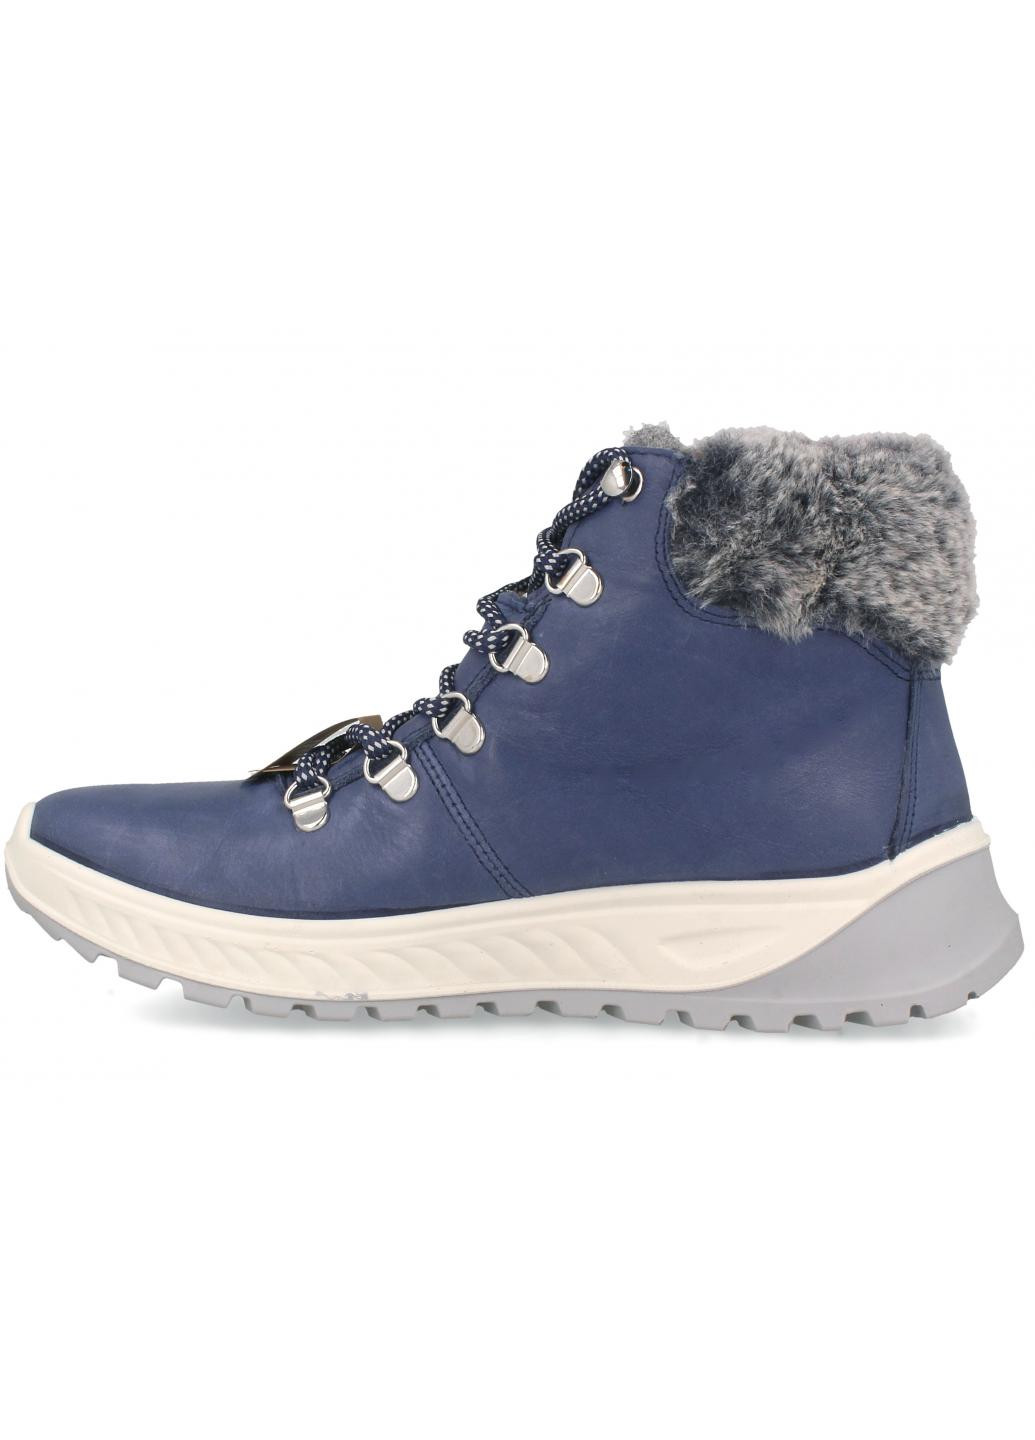 Зимние женские ботинки primaloft 14541-13 made in europe Forester